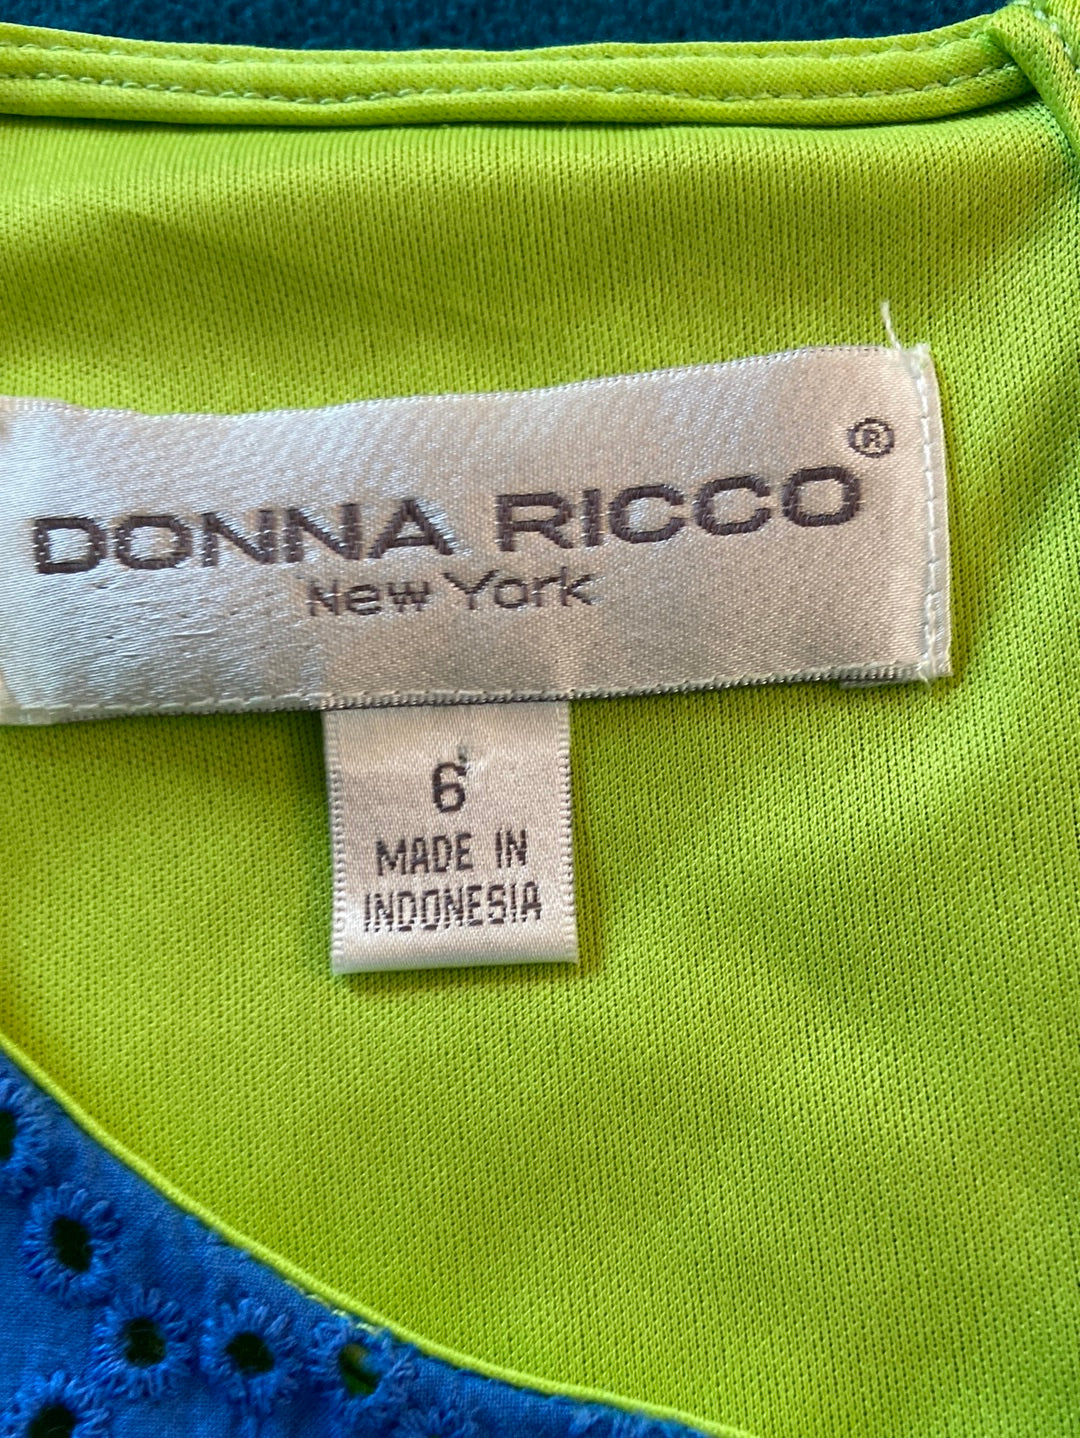 BLUE EYELET Donna Ricco Size 6